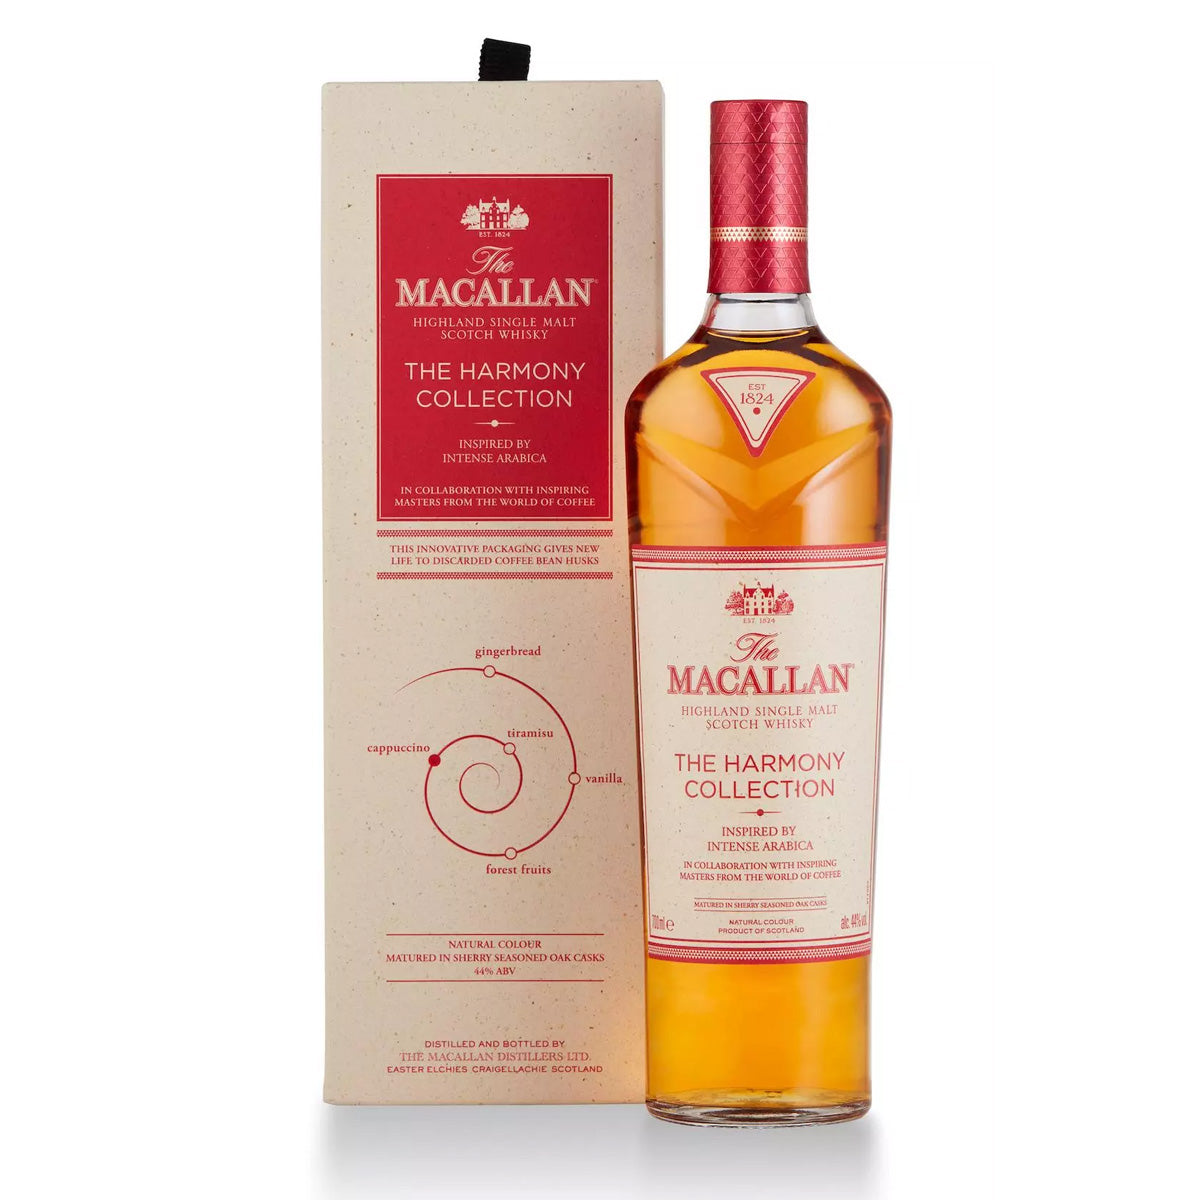 Macallan The Harmony Collection 2nd Edition (Intense Arabica) Single Malt Scotch [6 bottles]